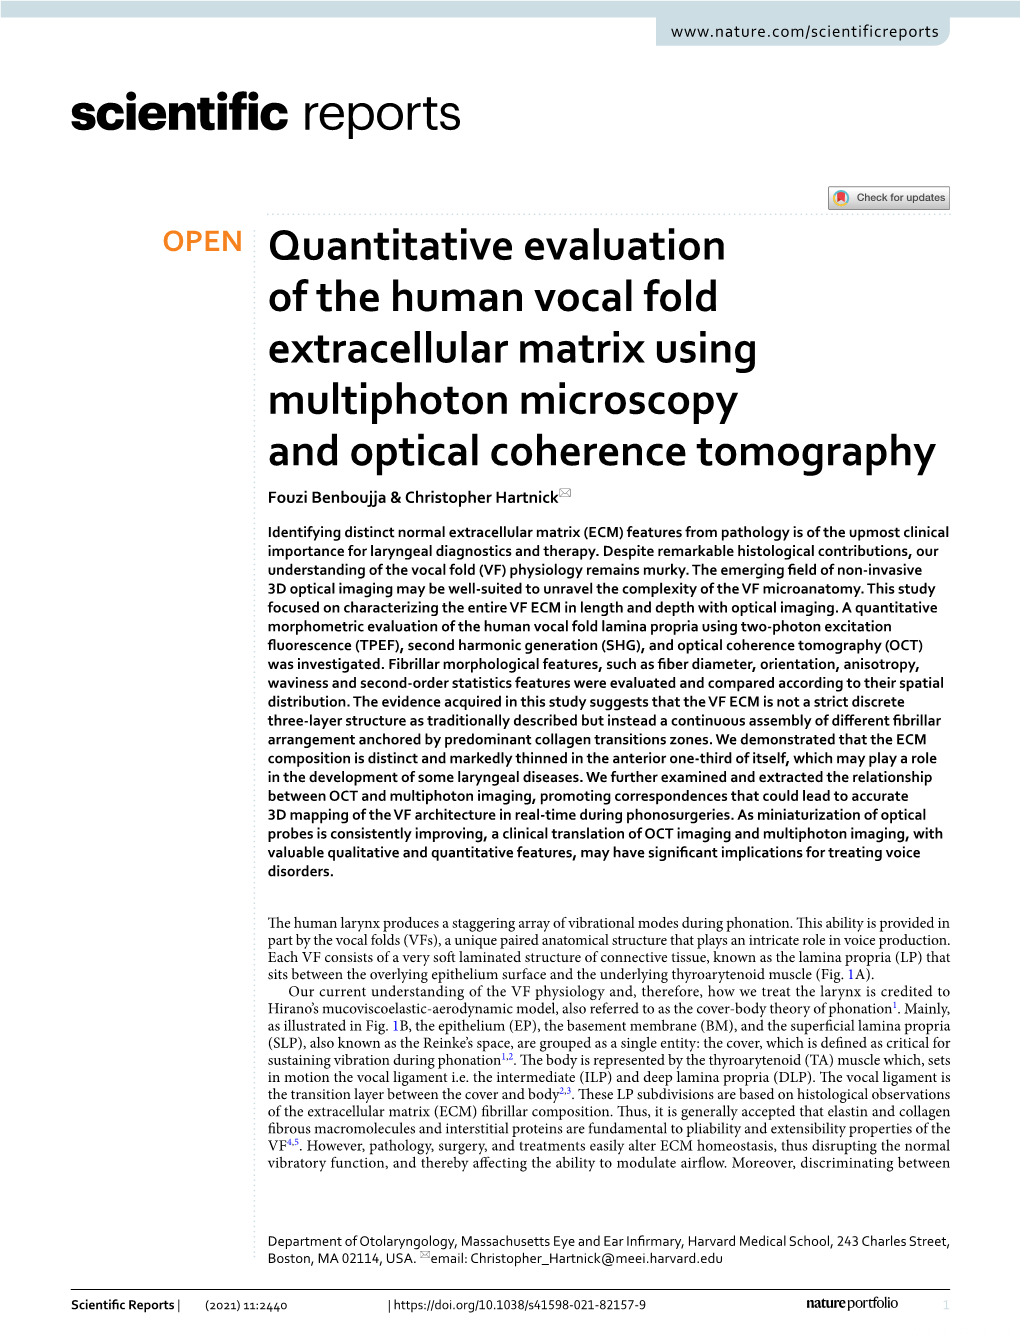 Quantitative Evaluation of the Human Vocal Fold Extracellular Matrix Using Multiphoton Microscopy and Optical Coherence Tomograp